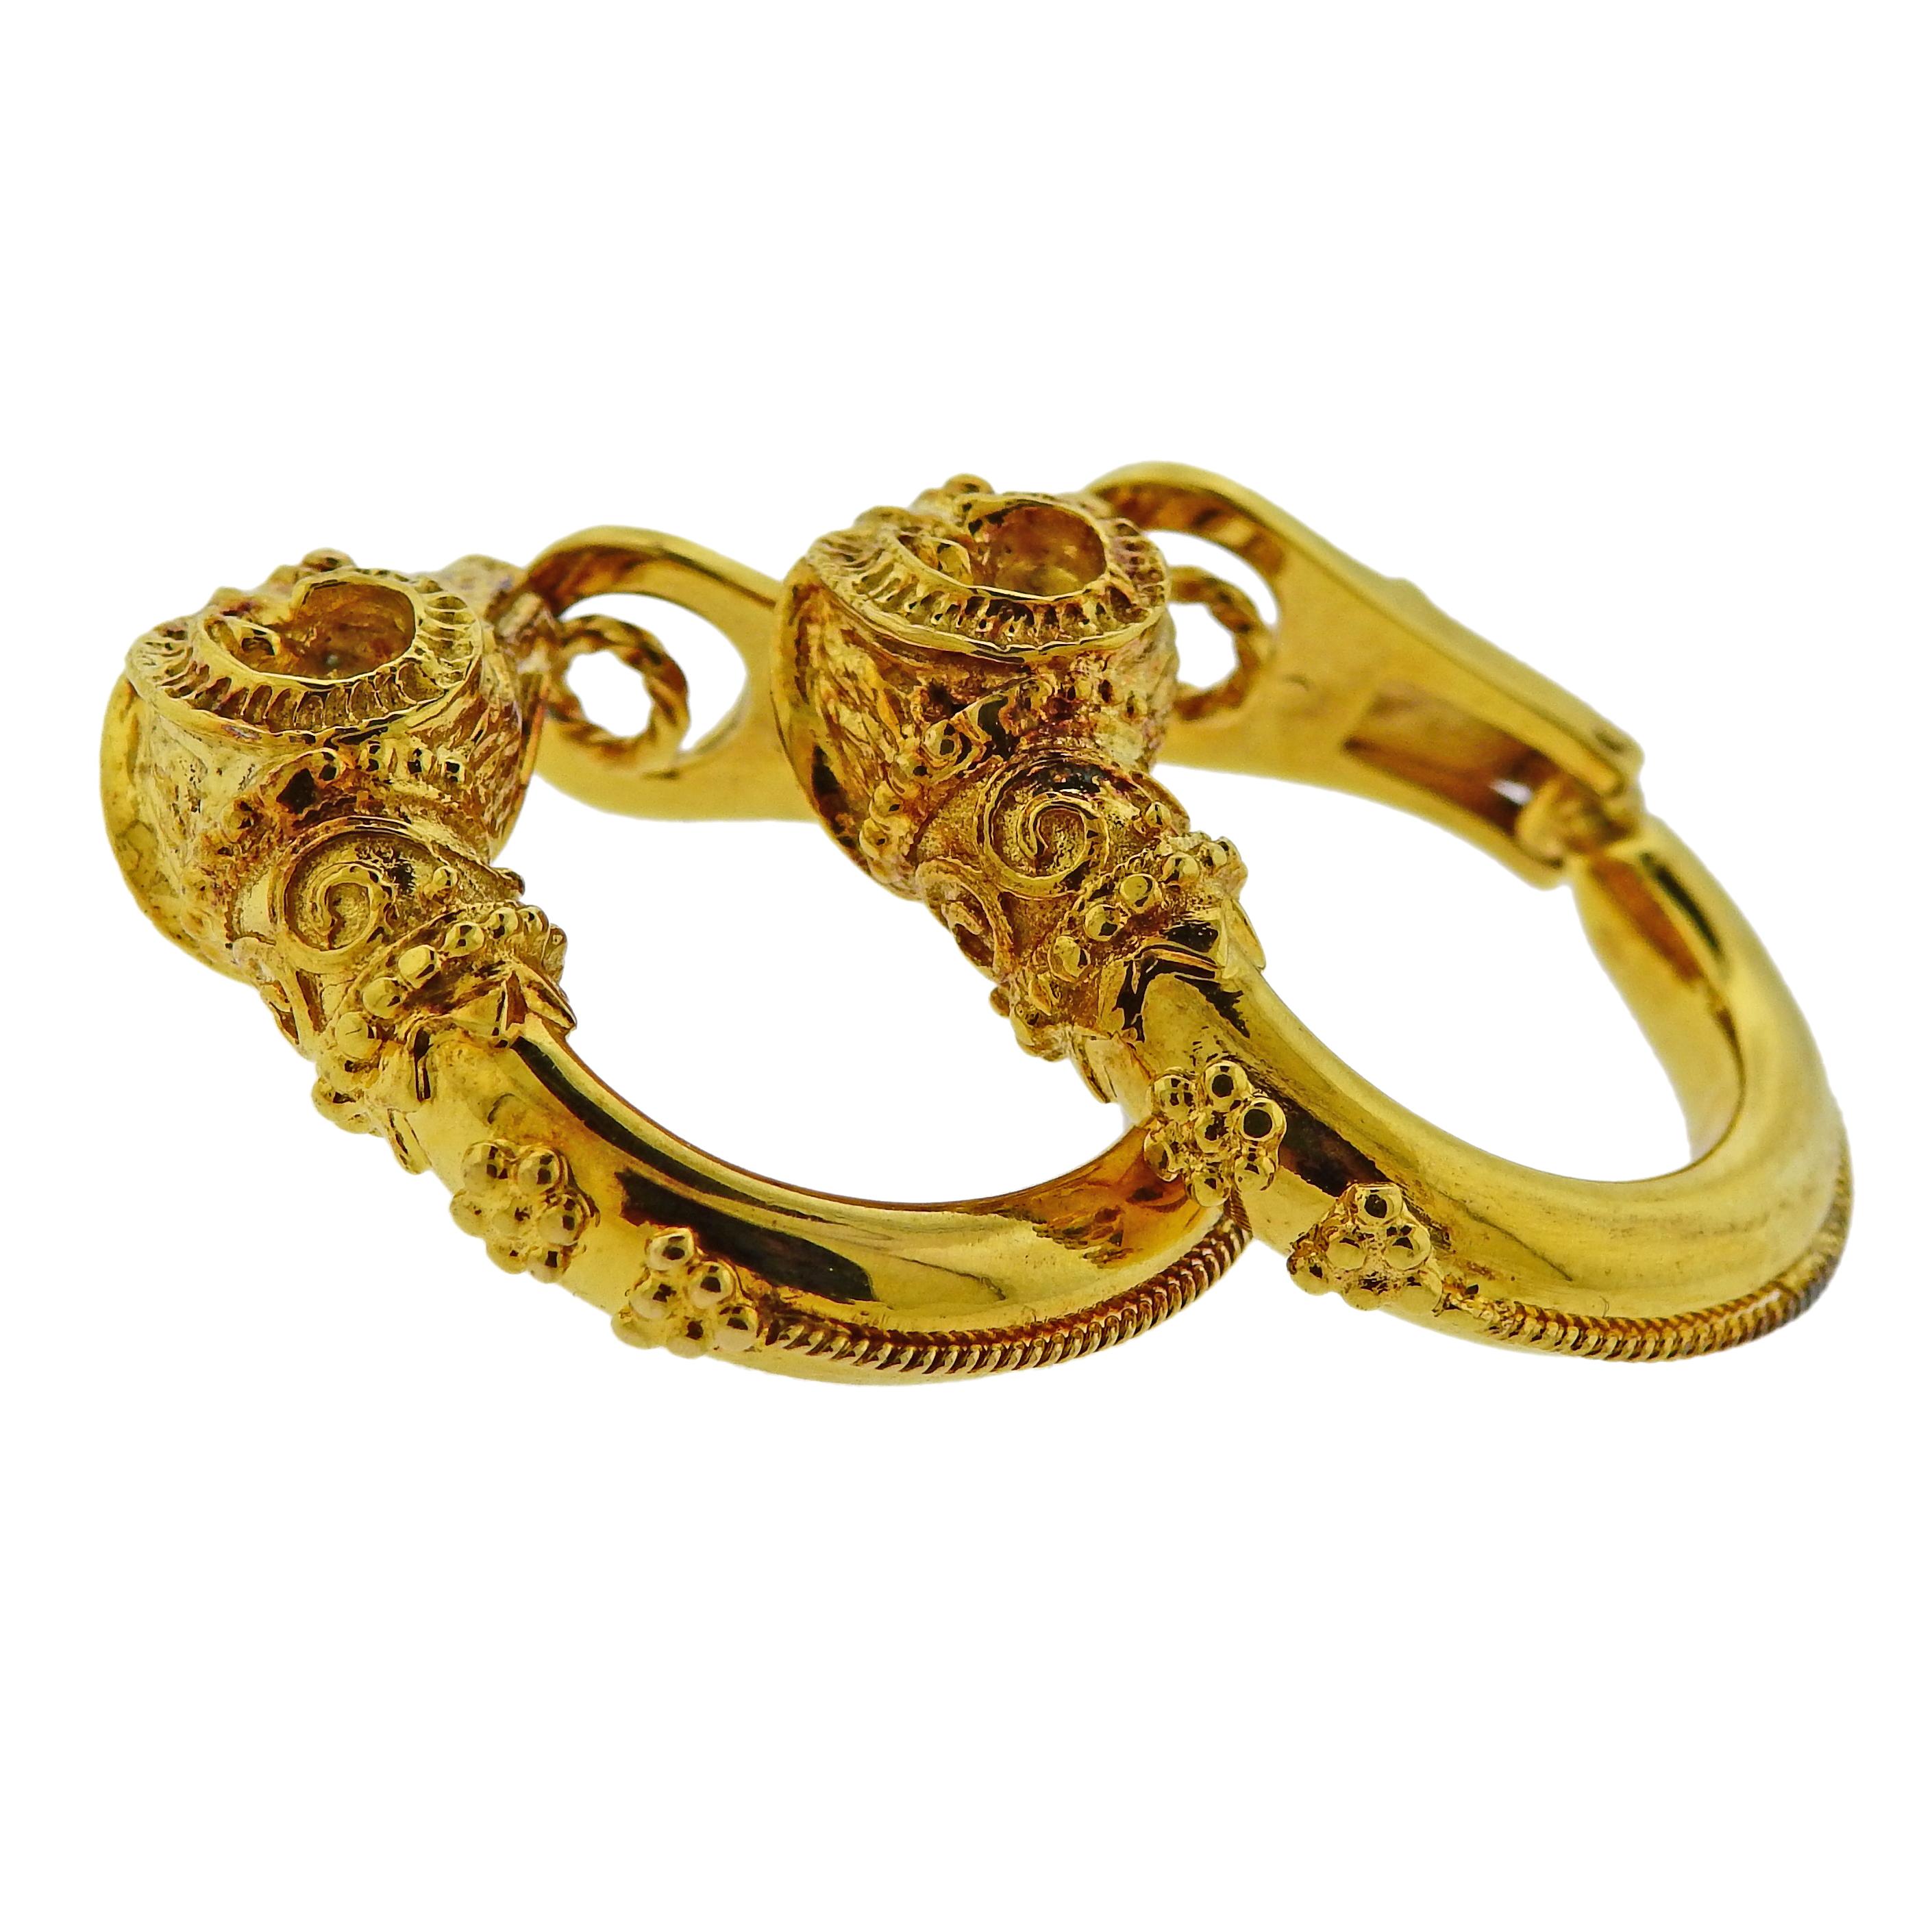 Pair of 18k yellow gold hoop earrings by Zolotas Greece, depicting ram's heads.  Earrings are 28mm in diameter, Ram's head - 11mm x 15mm. Weigh 20.8 grams. Marked: Zolotas, 750. 